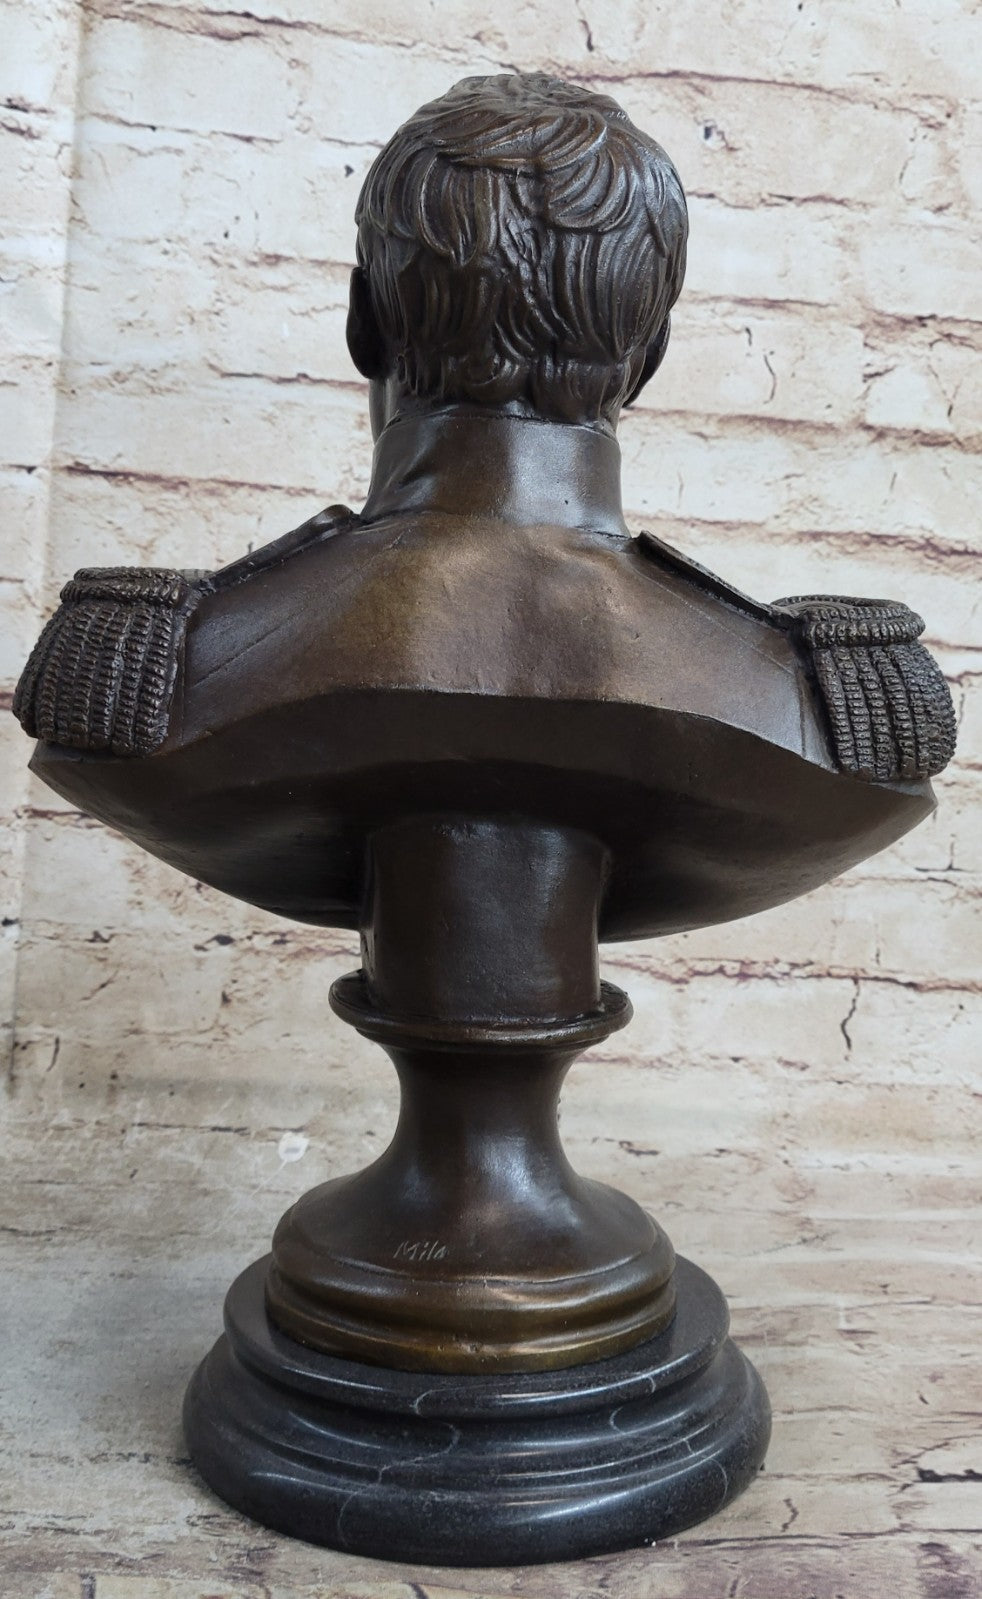 Home/Office Art Decor Bronze Statue Historical CLASSIC NAPOLEON BONAPARTE BUST